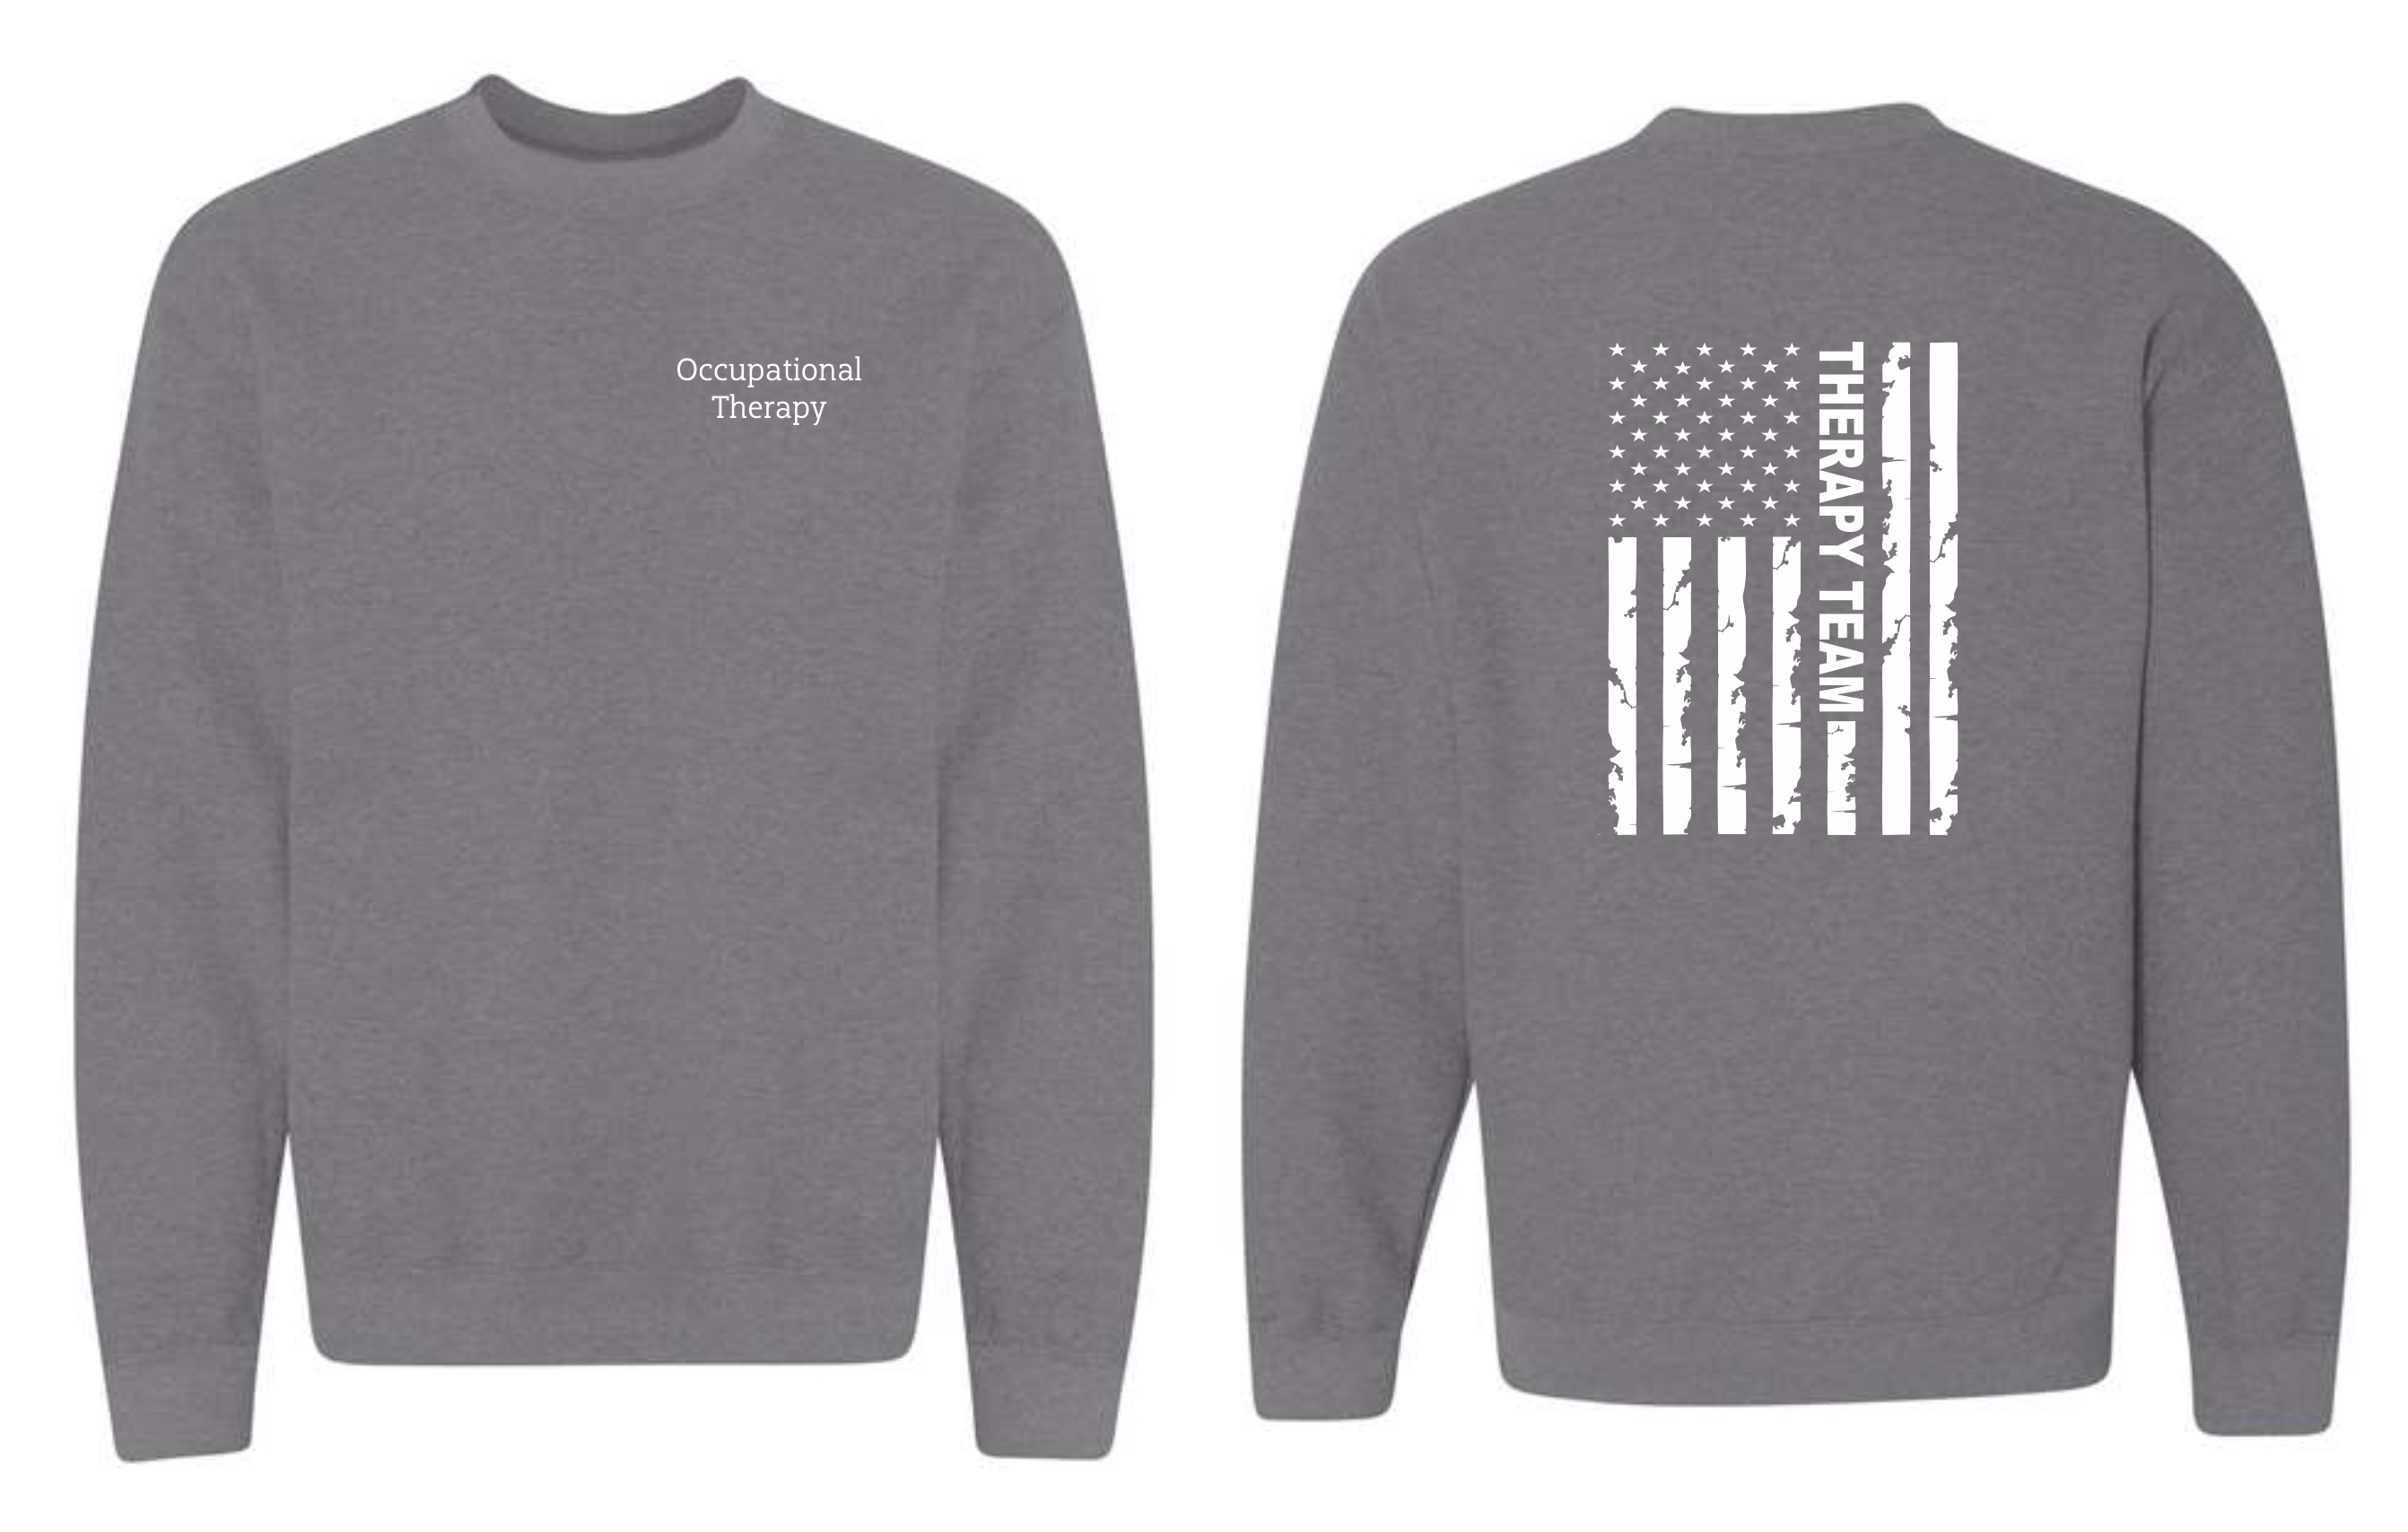 PHW - Occupational Therapy Flag - Cotton Crewneck Sweatshirt